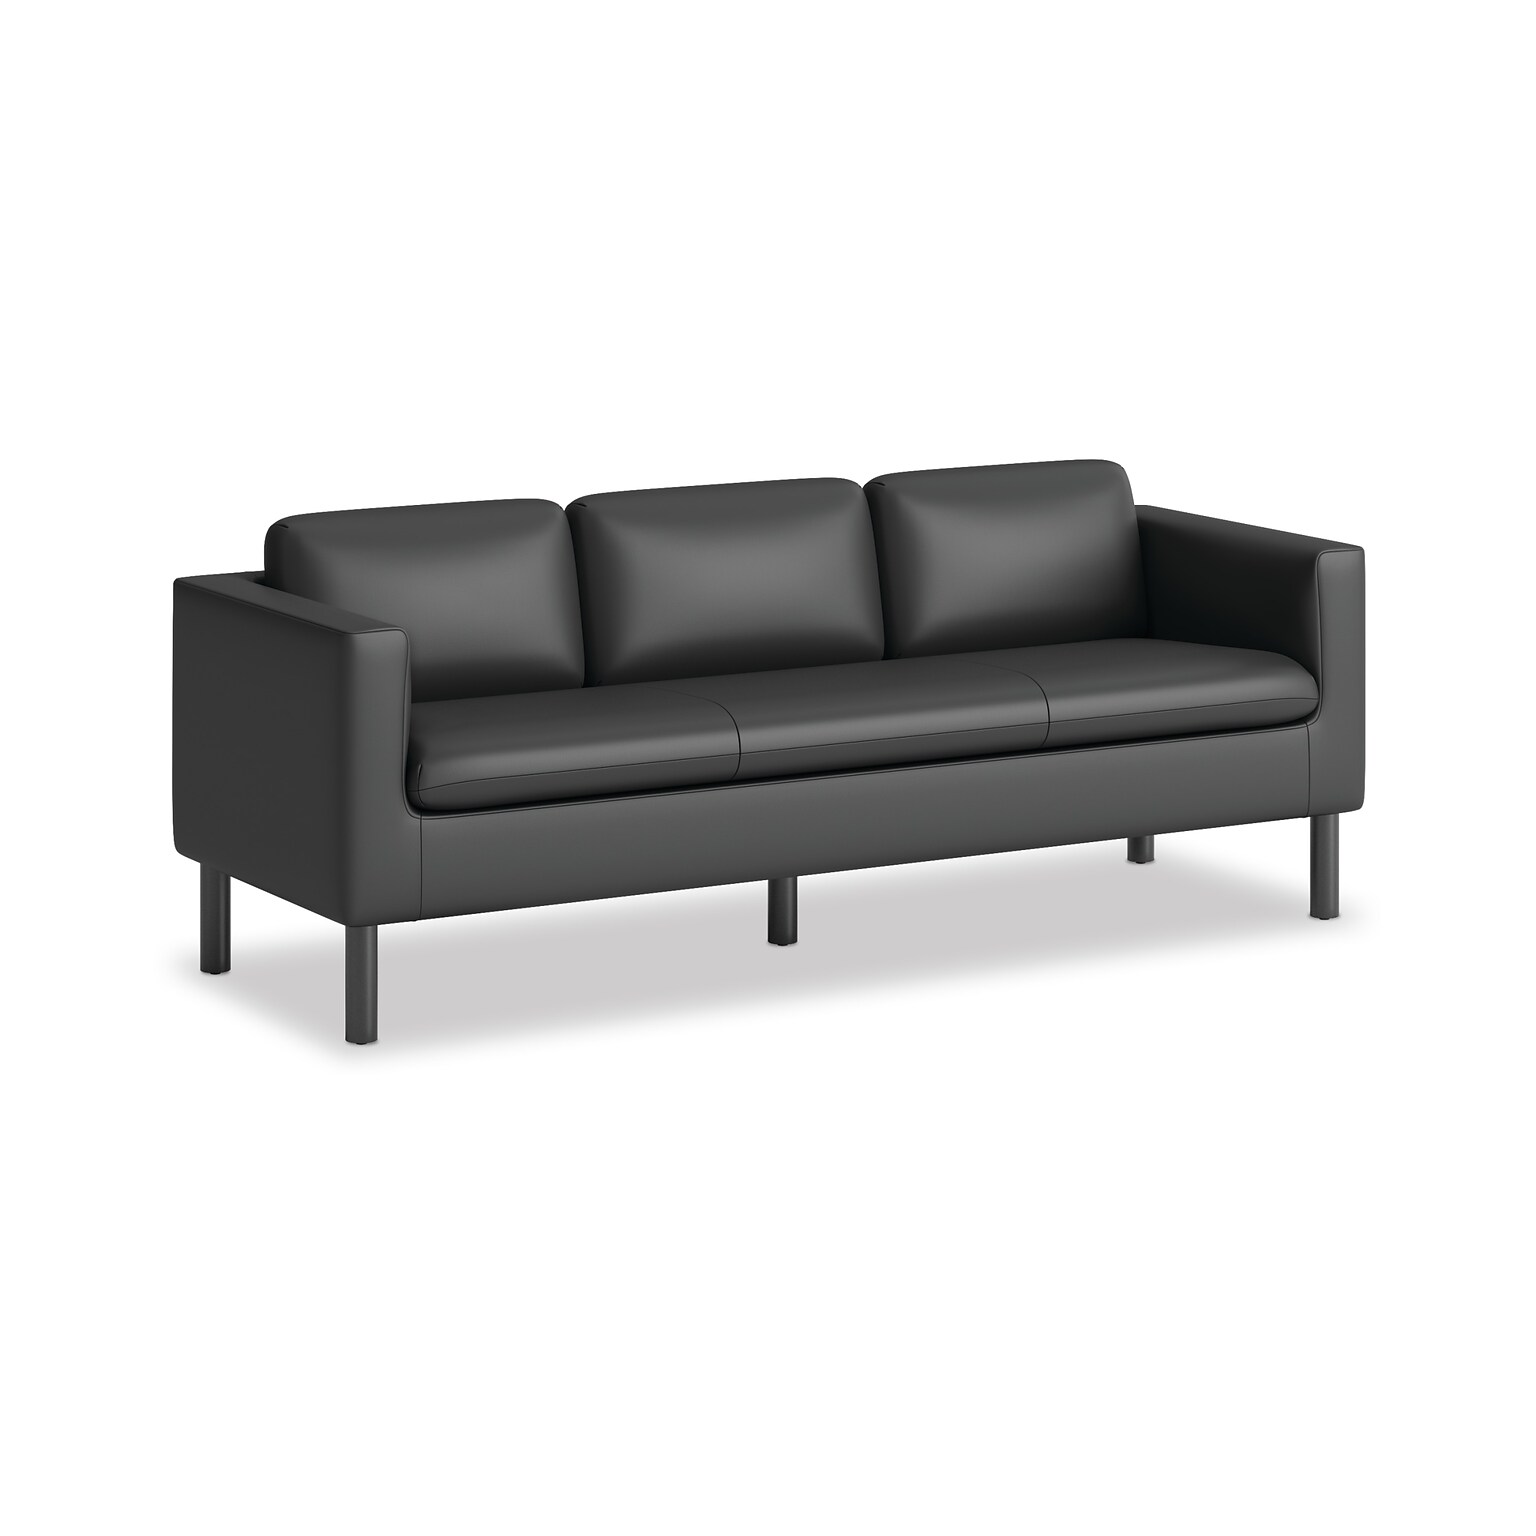 HON Parkwyn 77 Polyurethane Sofa, Black (HVLVL3.BLK01)